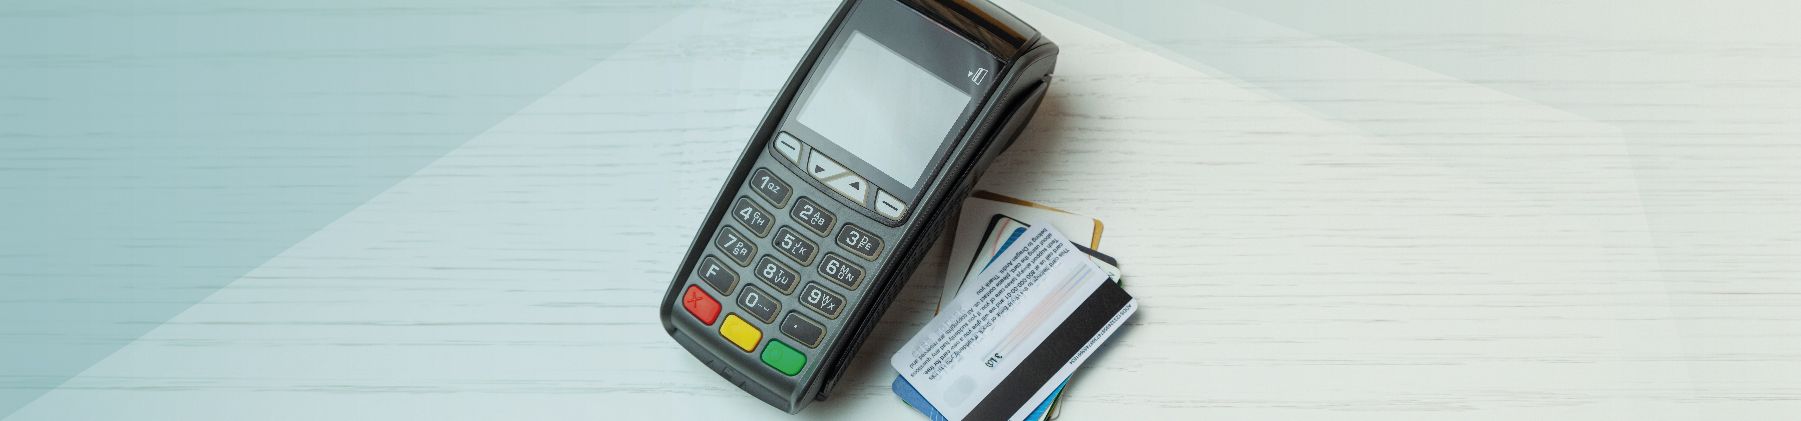 Payment acceptance through POS - Bank of Karditsa